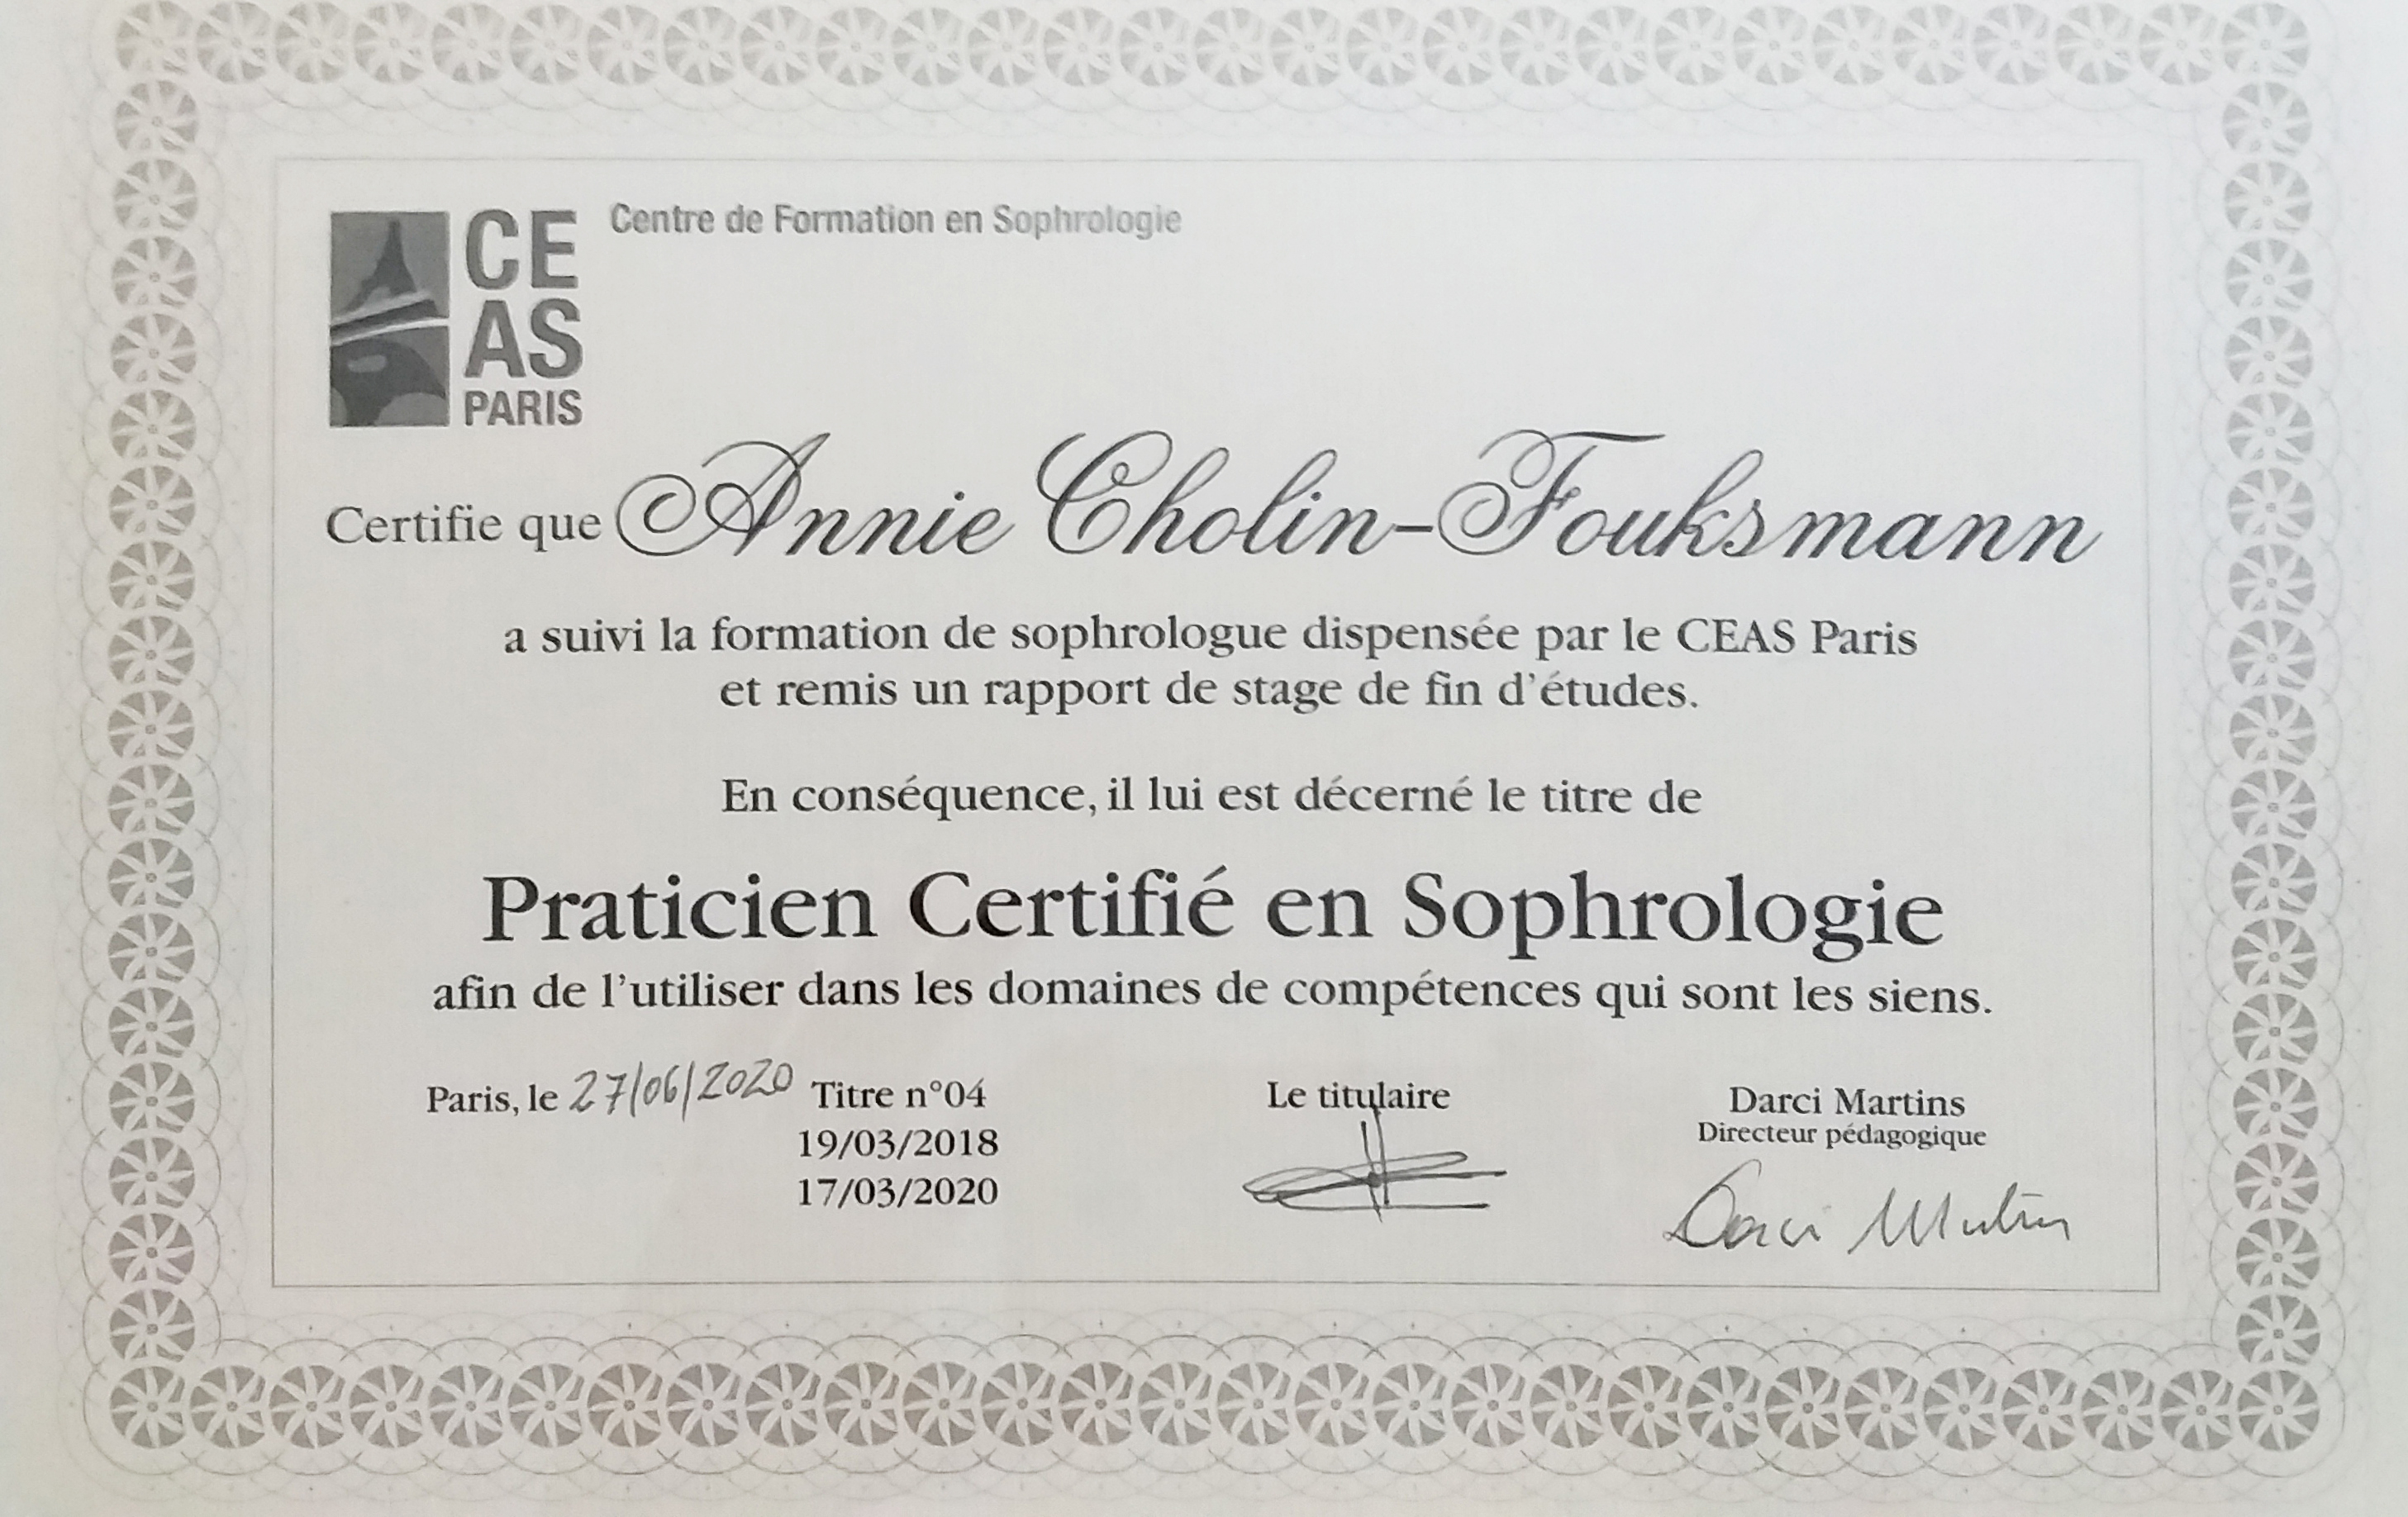 Certification praticienne certifiée en sophrologie